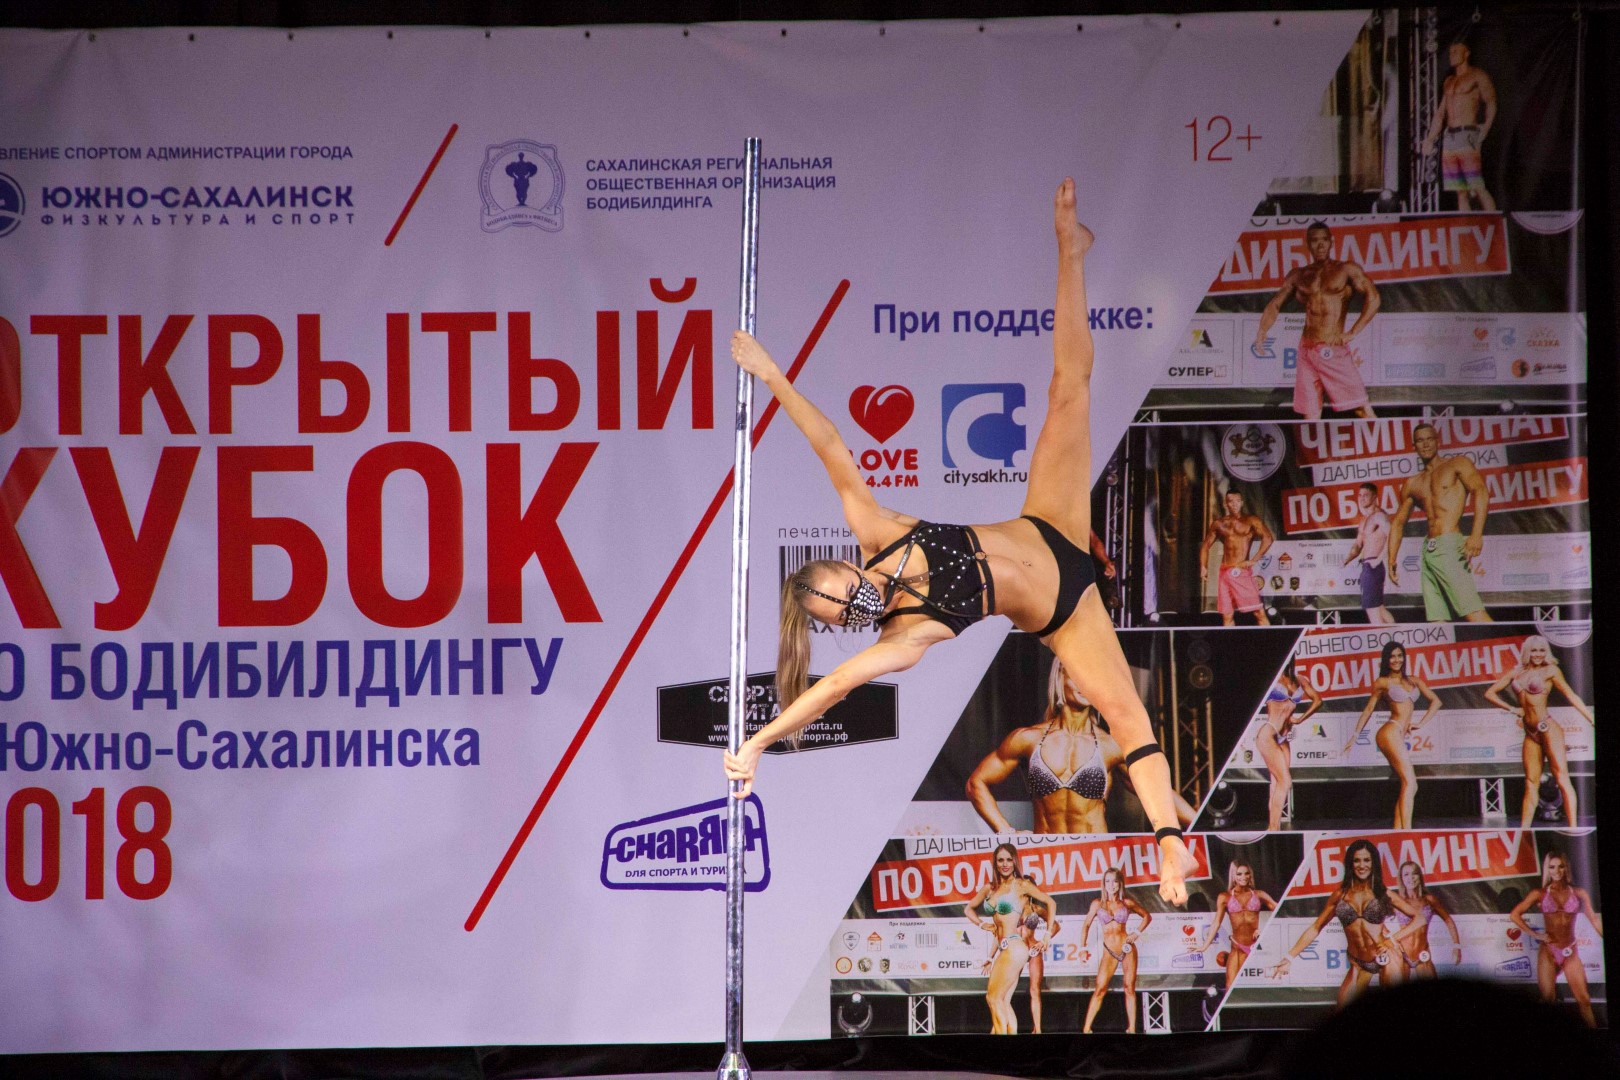 Открытый Кубок Южно-Сахалинска по бодибилдингу